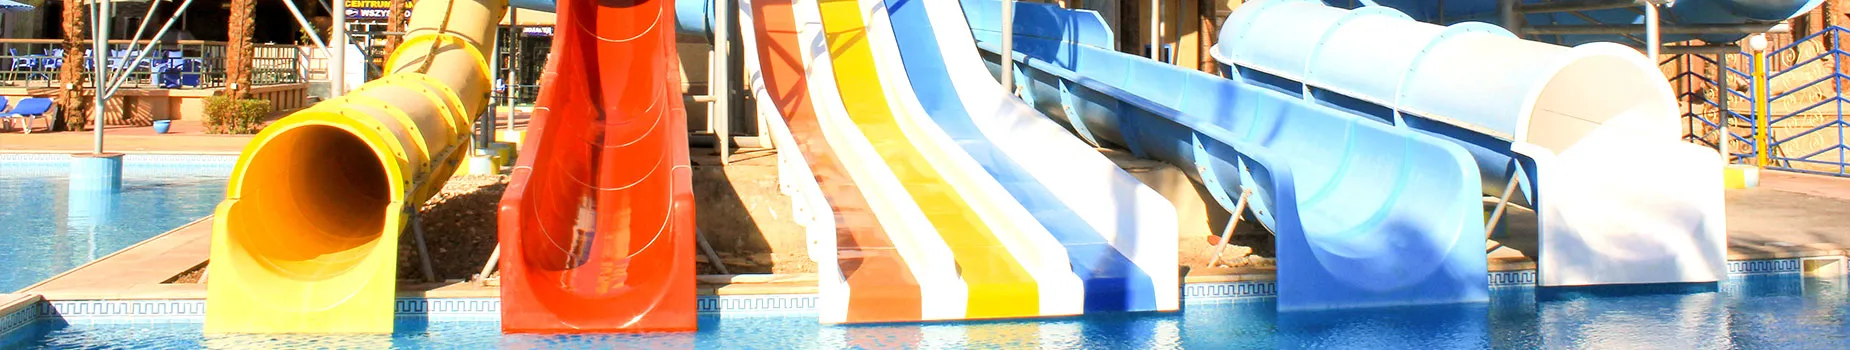 Hotels met waterpark op Ibiza